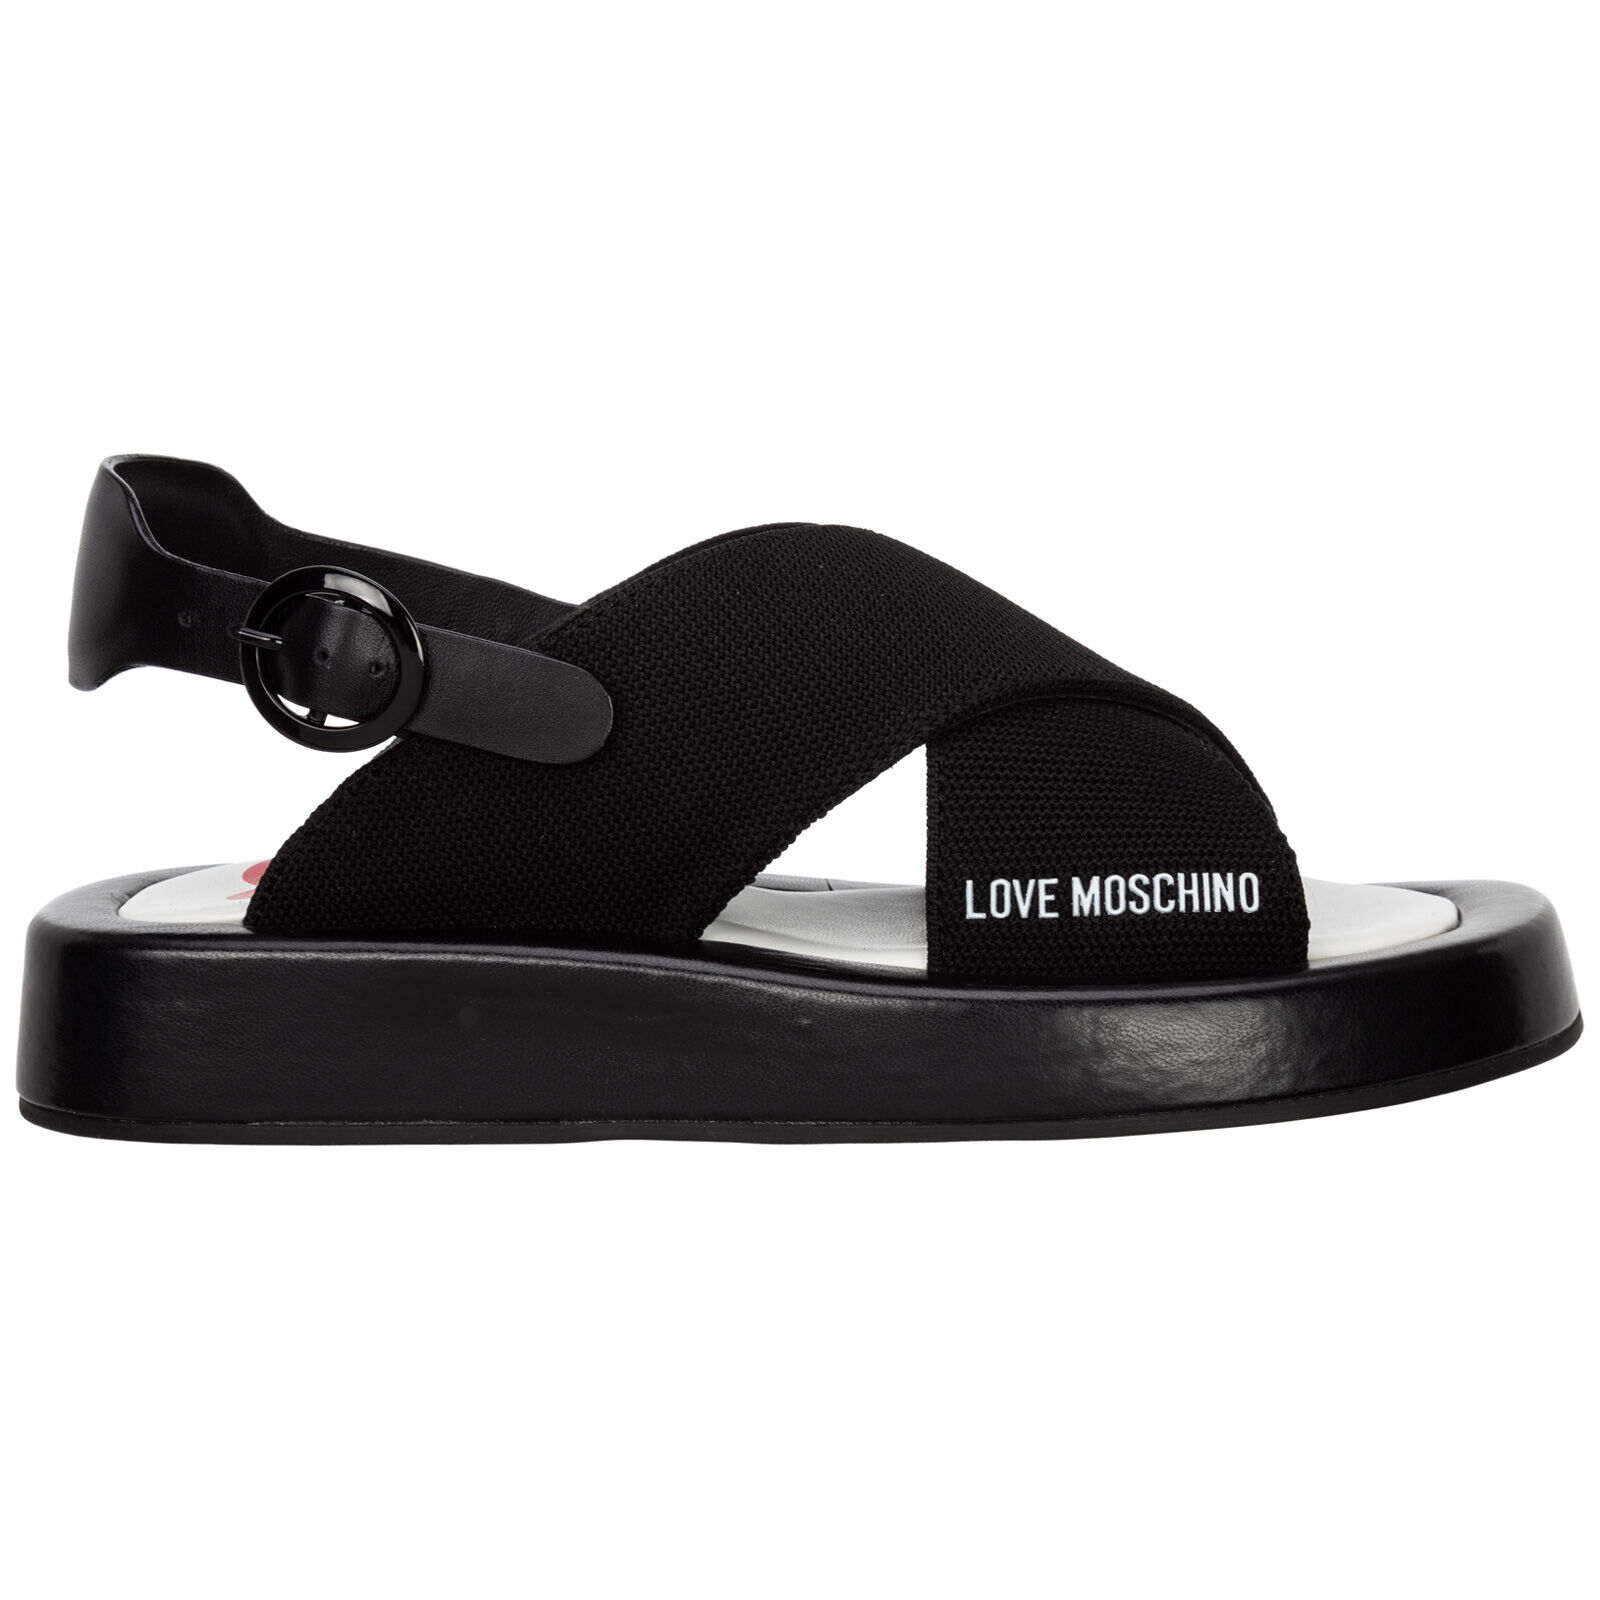 Love Moschino sandals women JA16123G0EIZM000 Black leather logo detail shoes